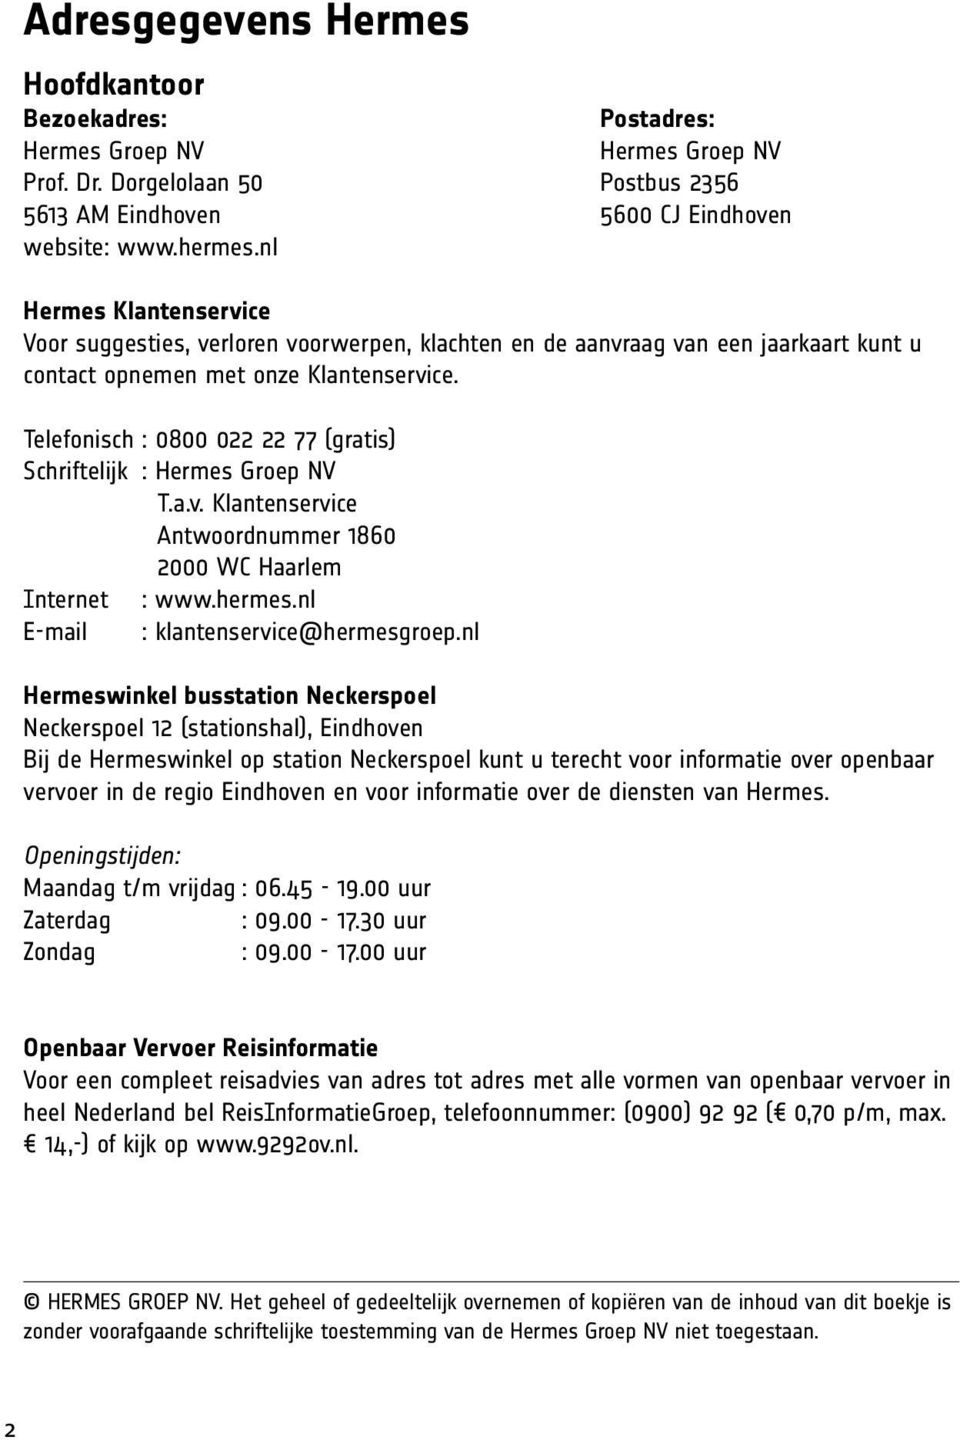 Telefonisch : 0800 022 22 77 (gratis) Schriftelijk : Hermes Groep NV T.a.v. Klantenservice Antwoordnummer 1860 2000 WC Haarlem Internet : www.hermes.nl E-mail : klantenservice@hermesgroep.